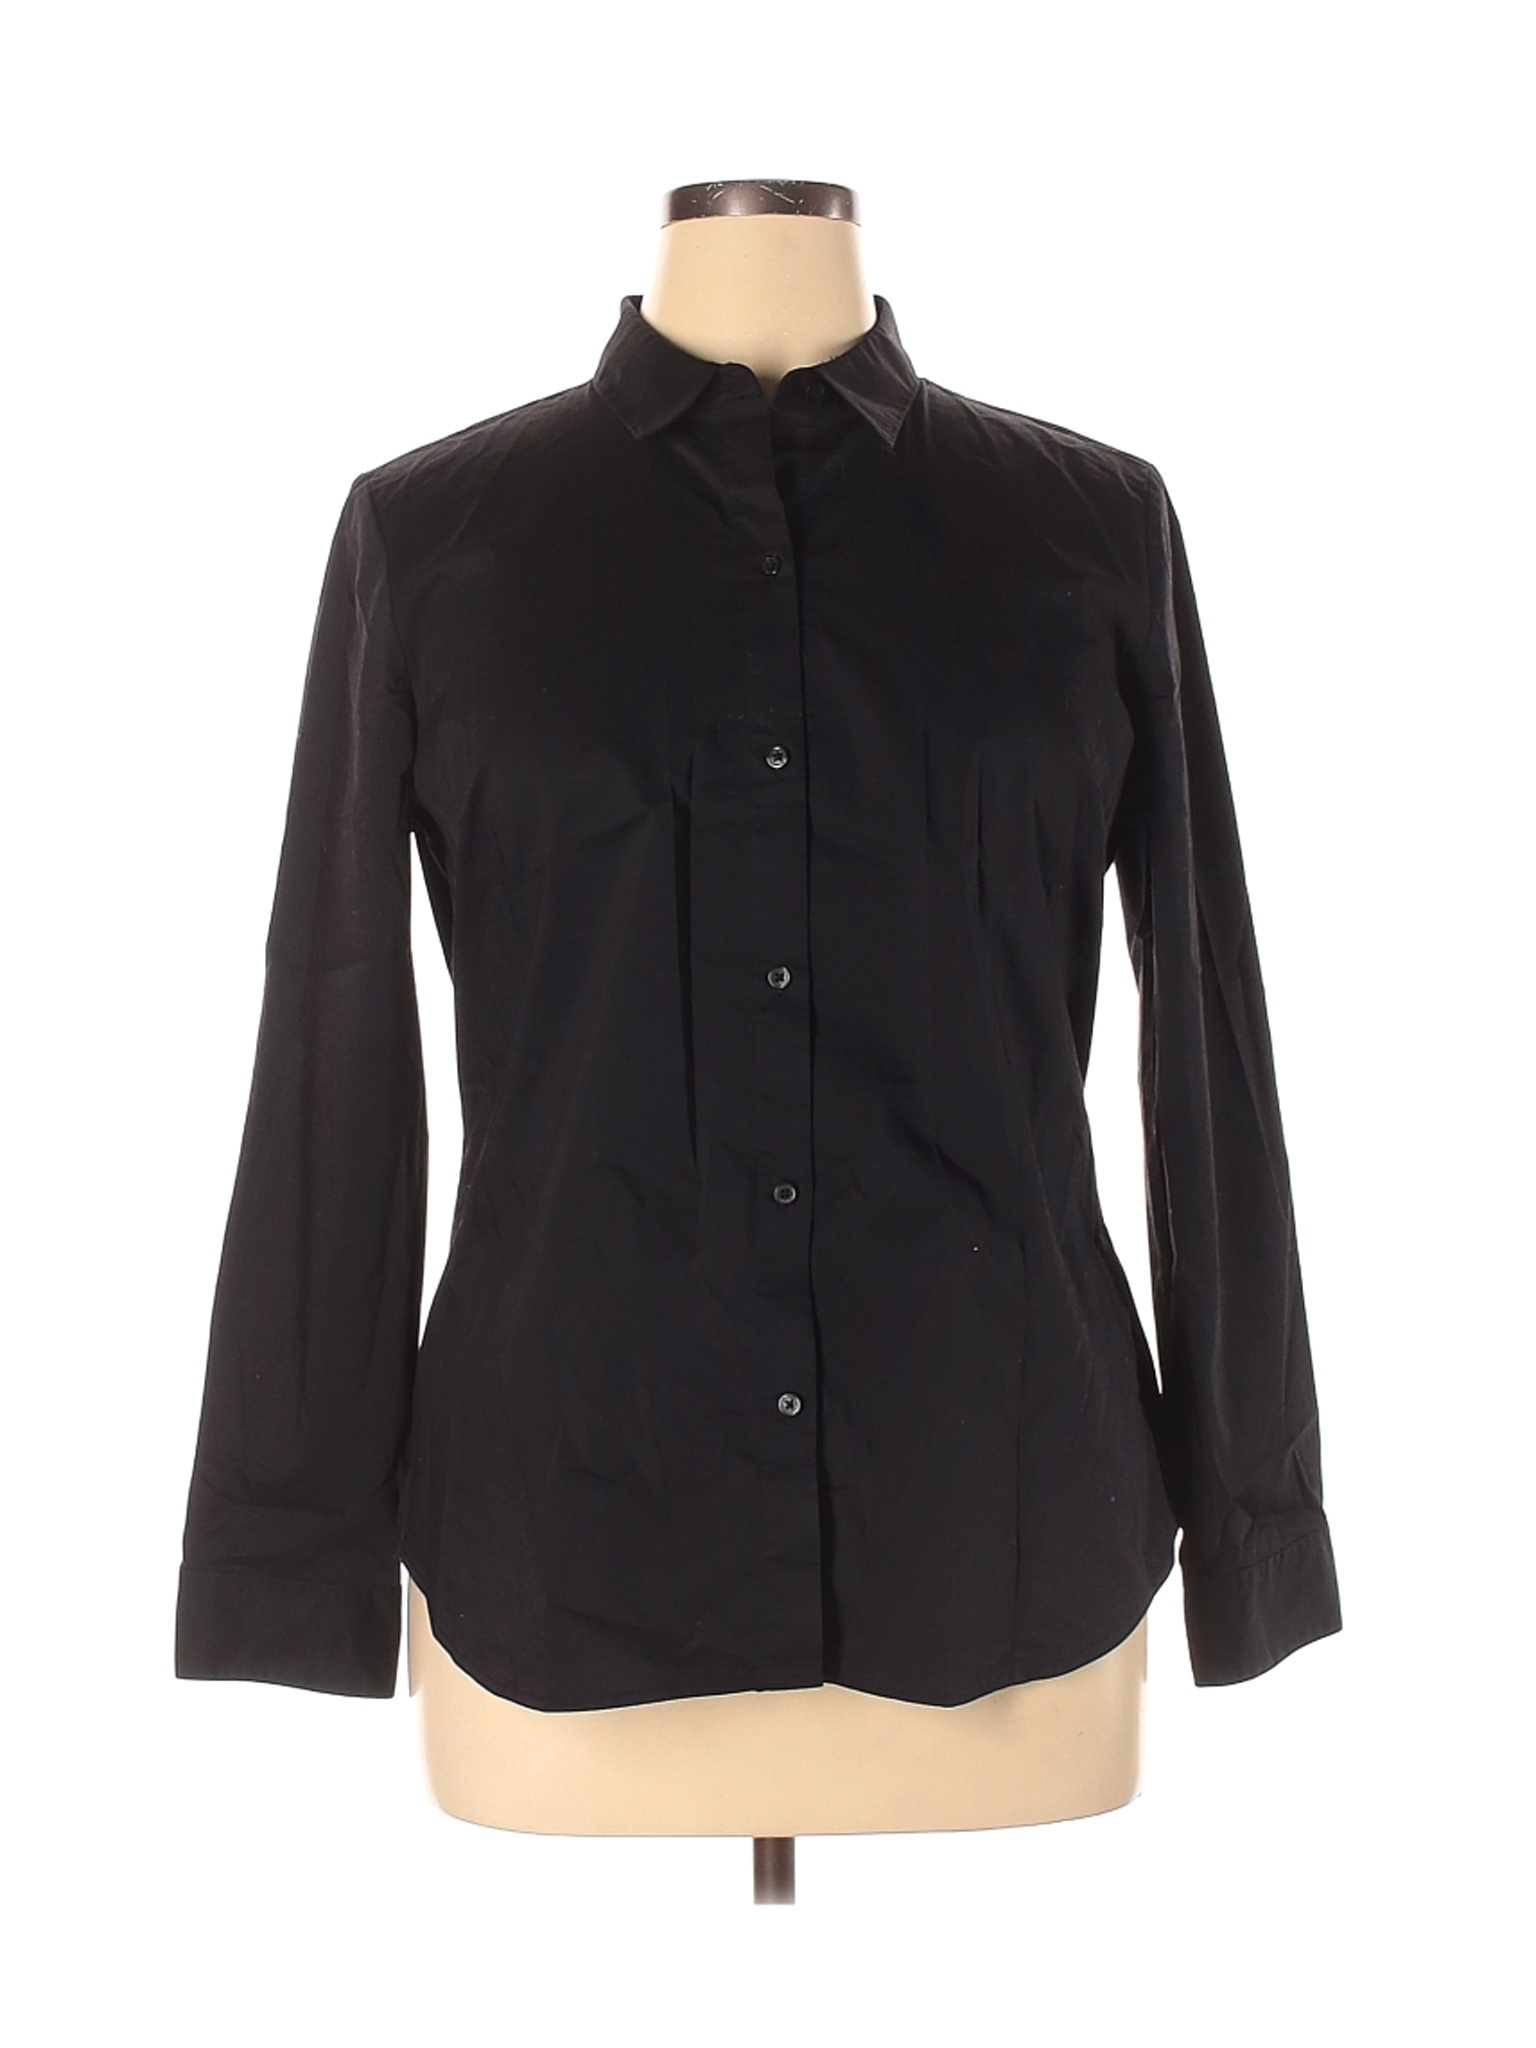 Apt. 9 Women Black Long Sleeve Button-Down Shirt XL | eBay